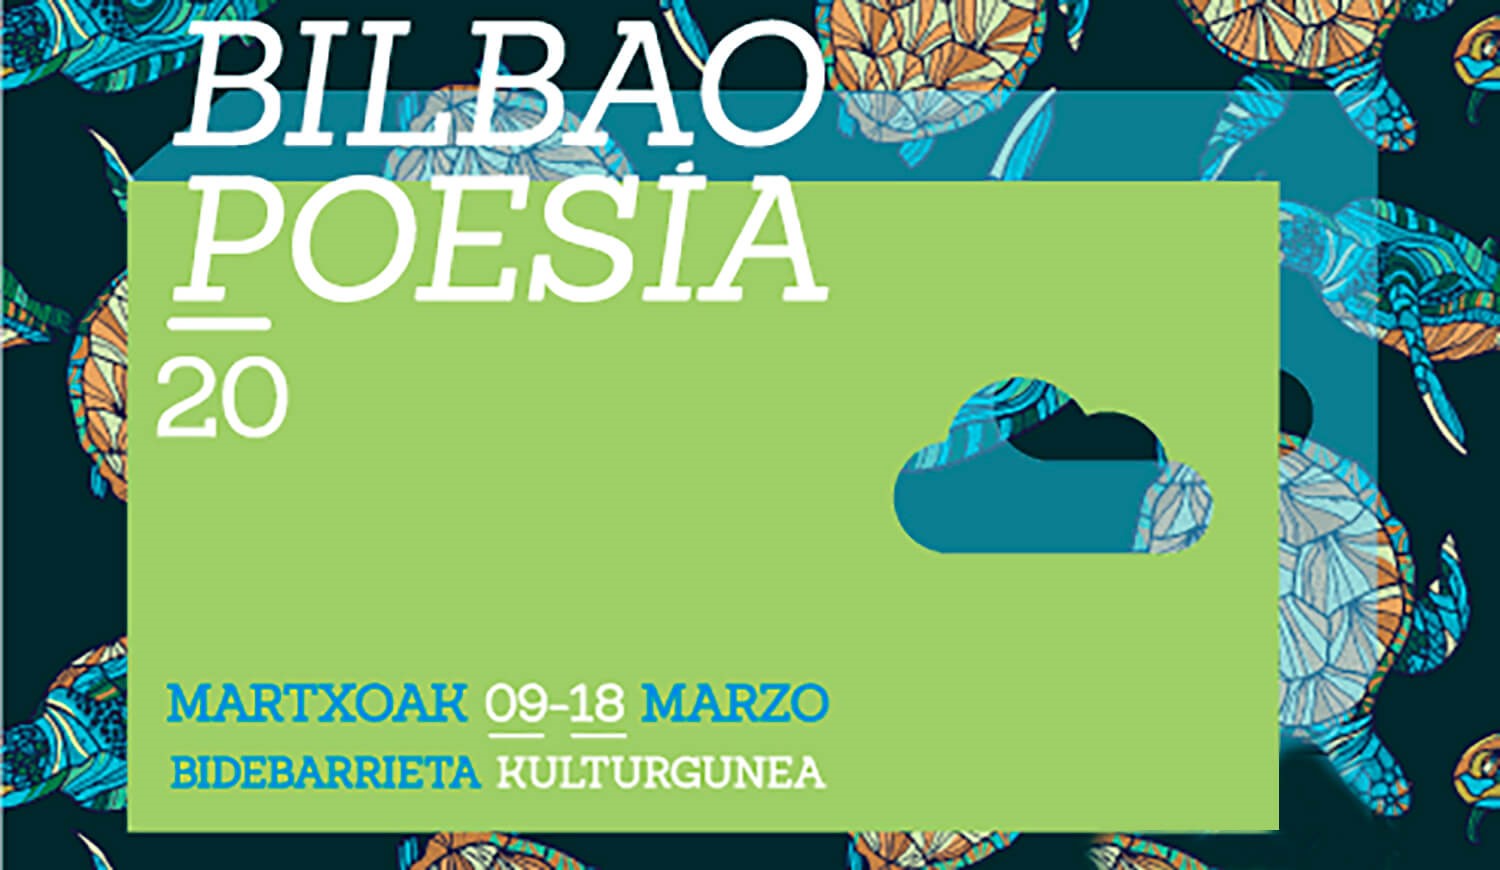 festival bilbao poesia 2020